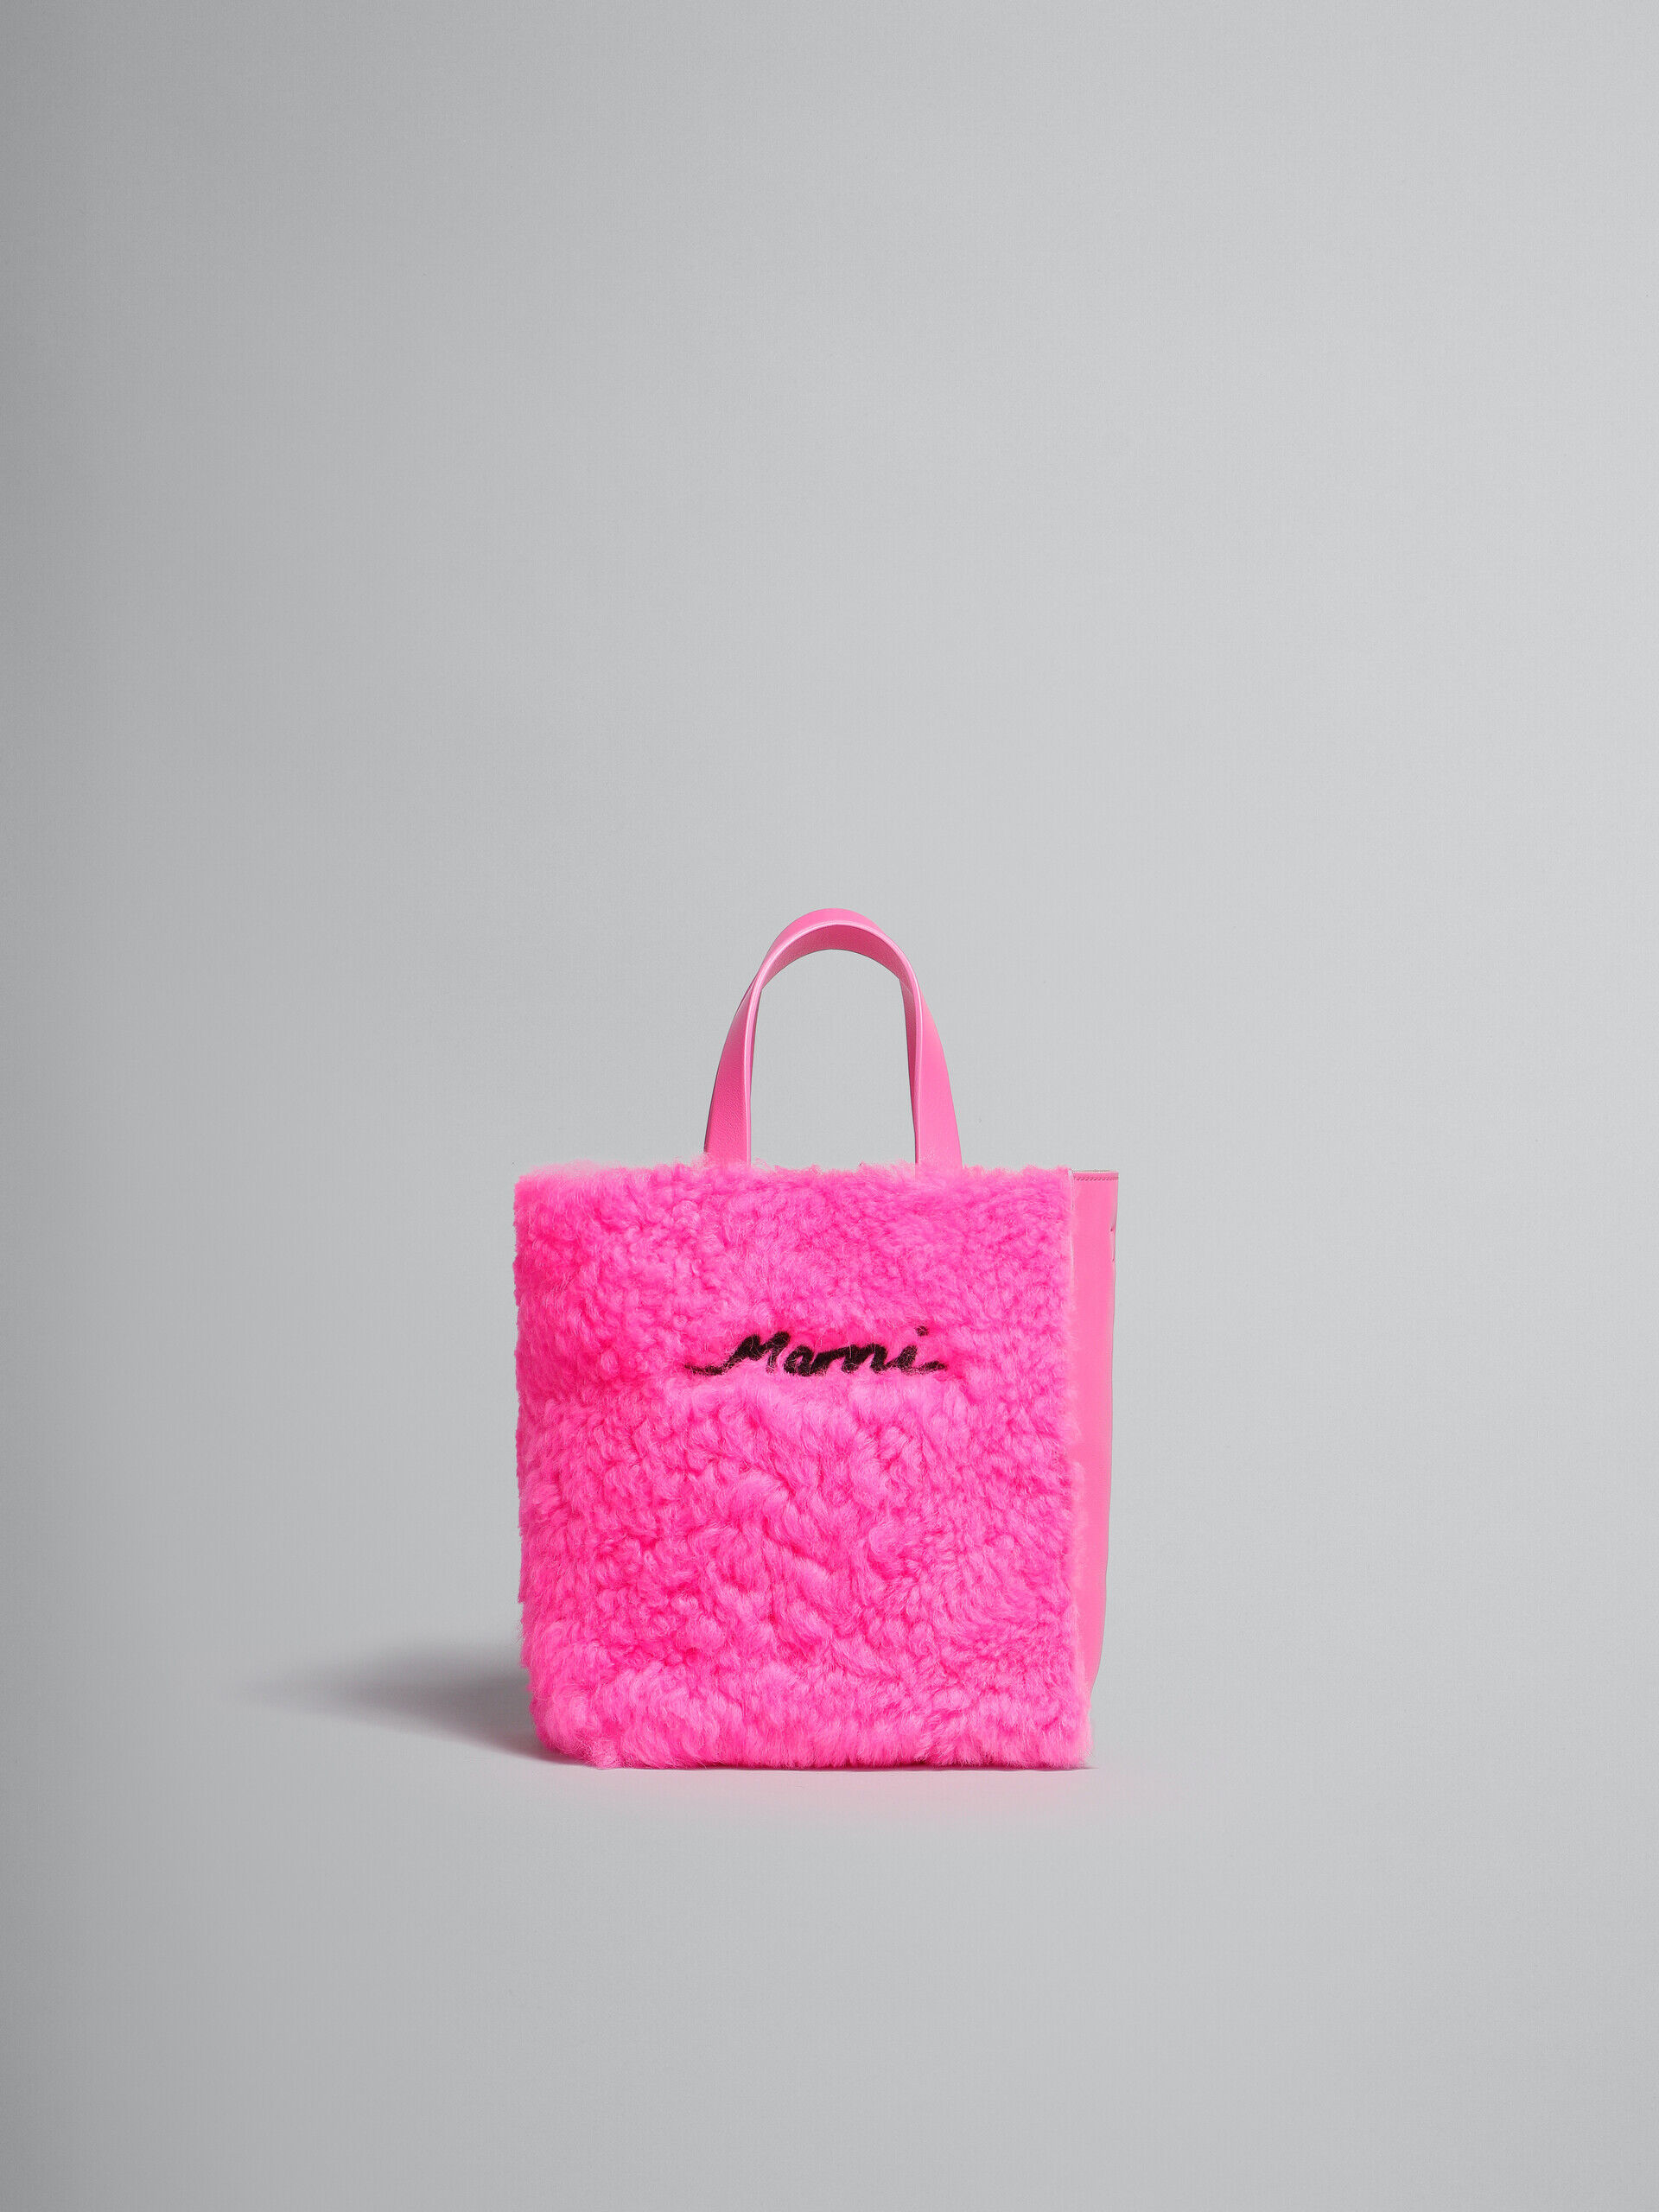 Museo Soft Mini Bag in bright pink shearling | Marni